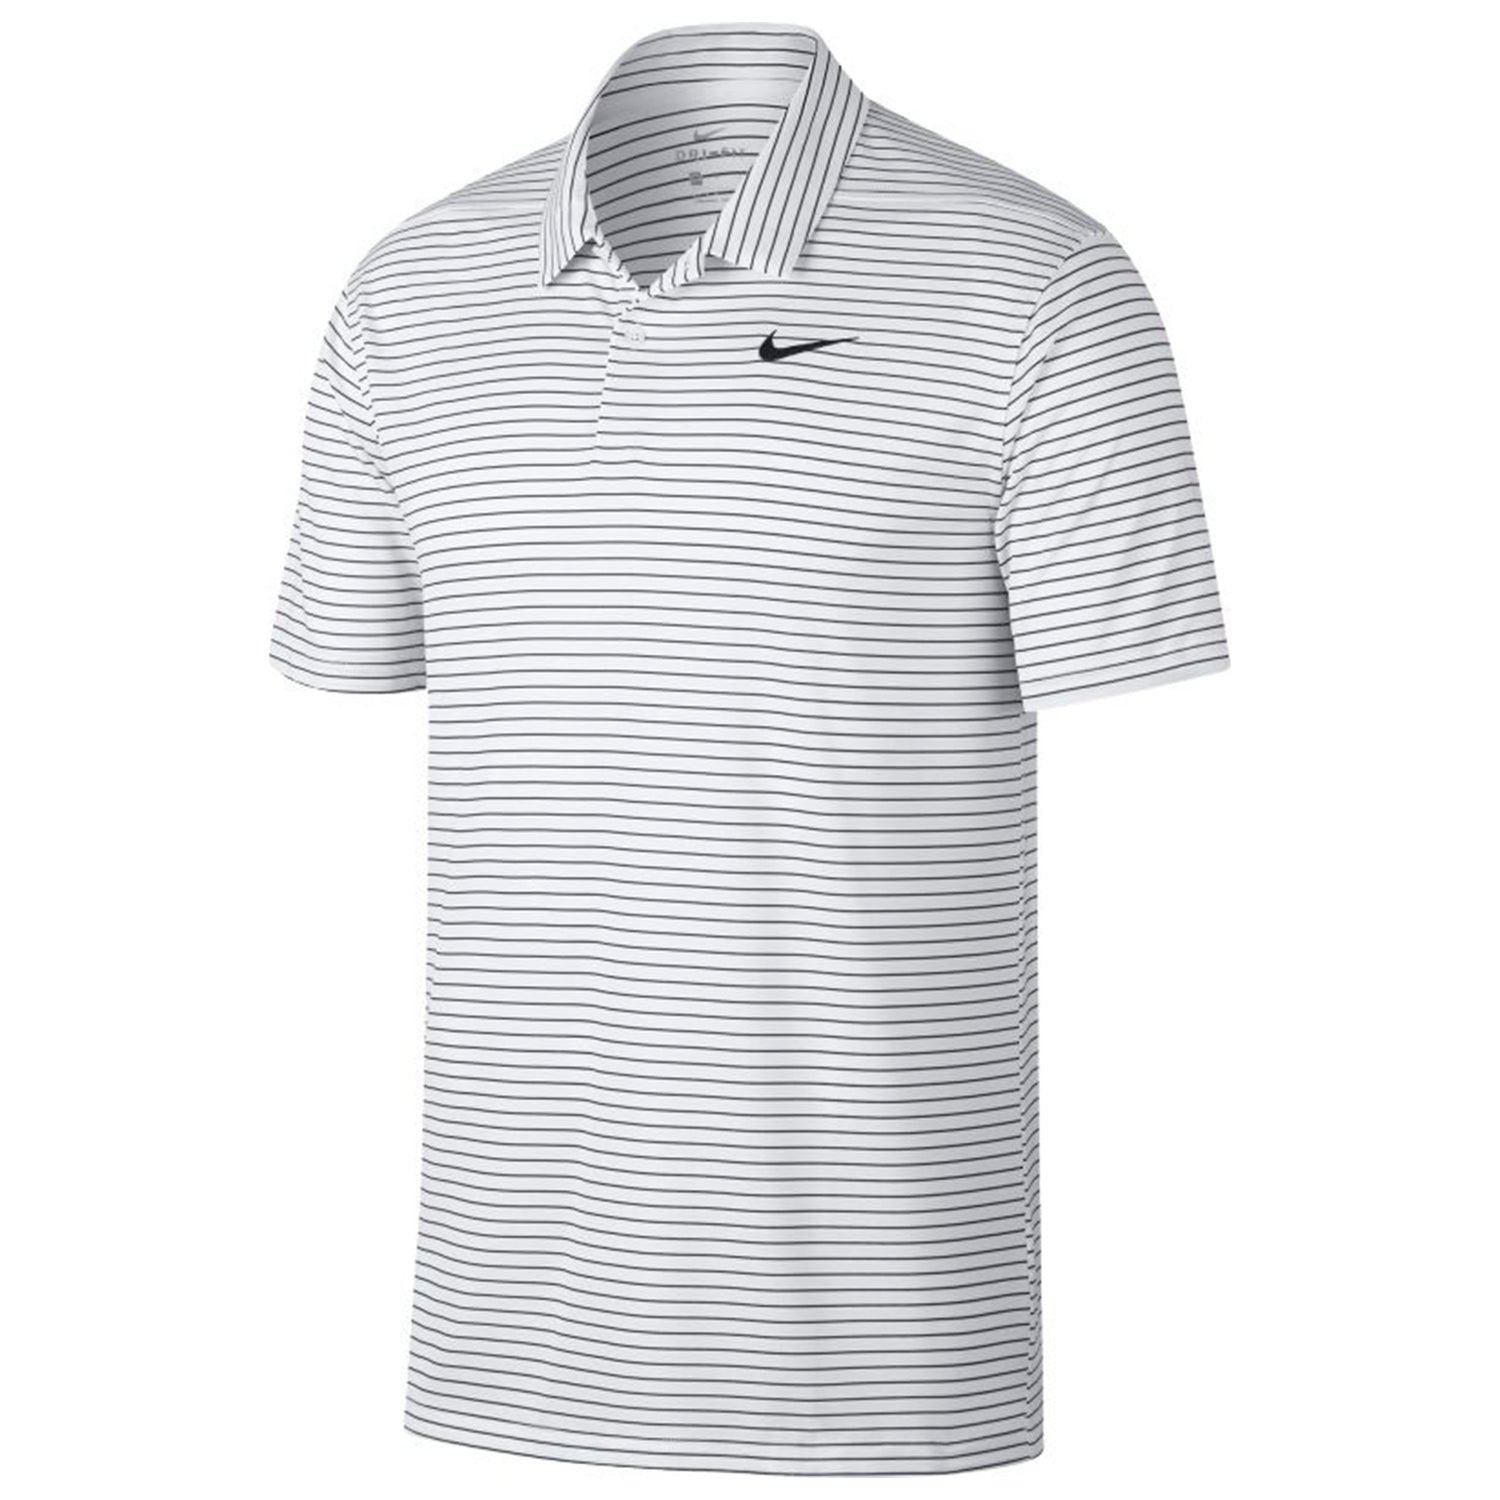 Nike Dri-fit Striped Golf Polo Mens Style : Aj5482